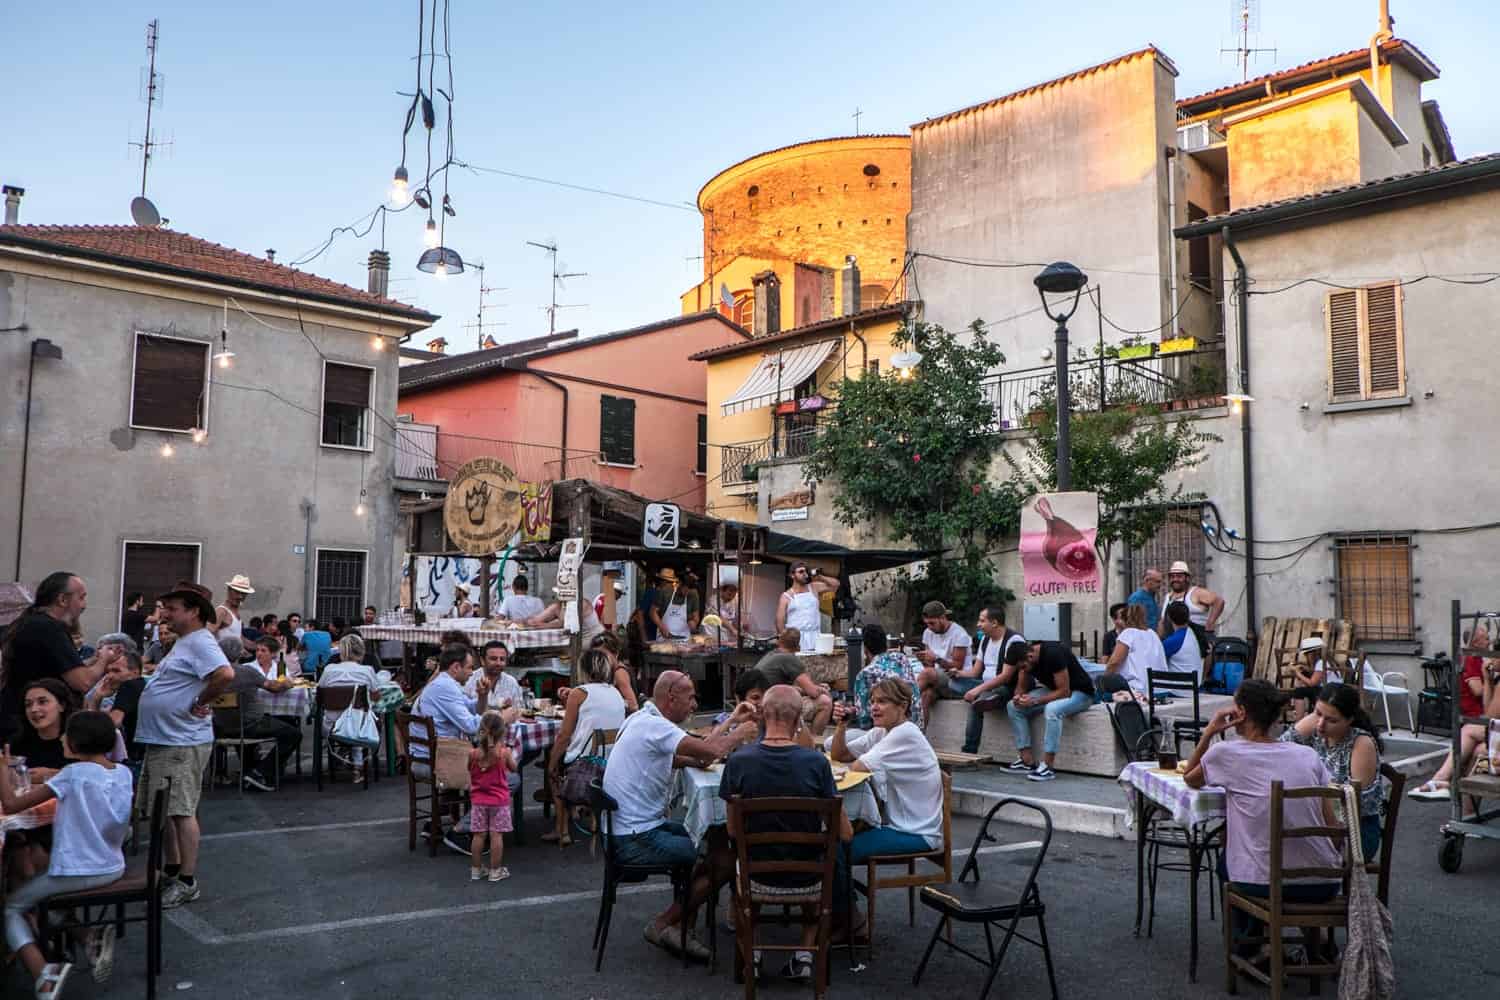 Al fresco food stalls during the Artusi Festival / Festa Artusiana in Forlimpopoli, Italy